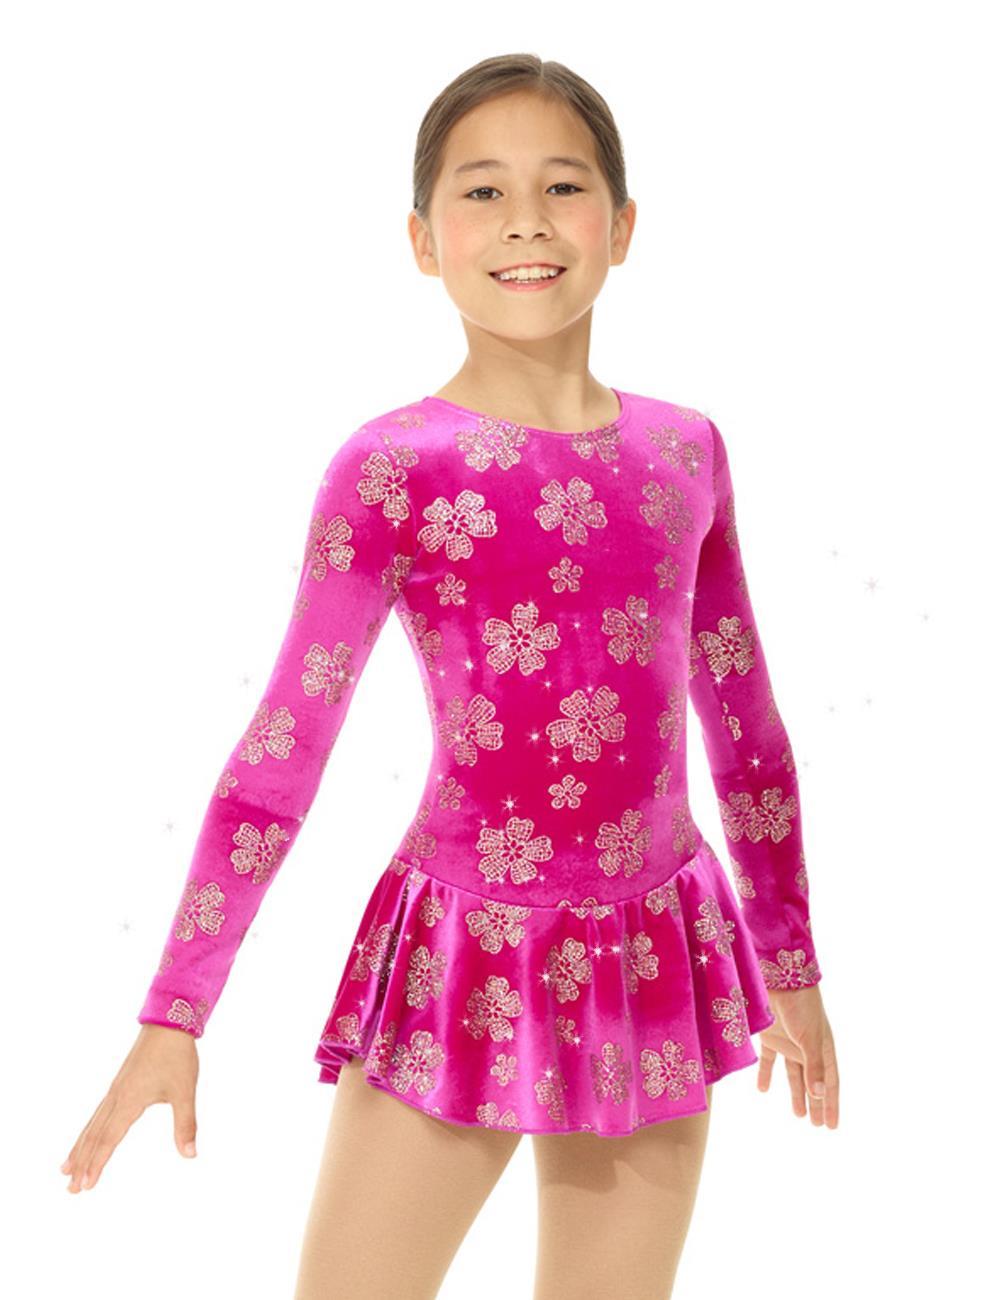 Mondor 2723 Born to Skate Glitter Dress